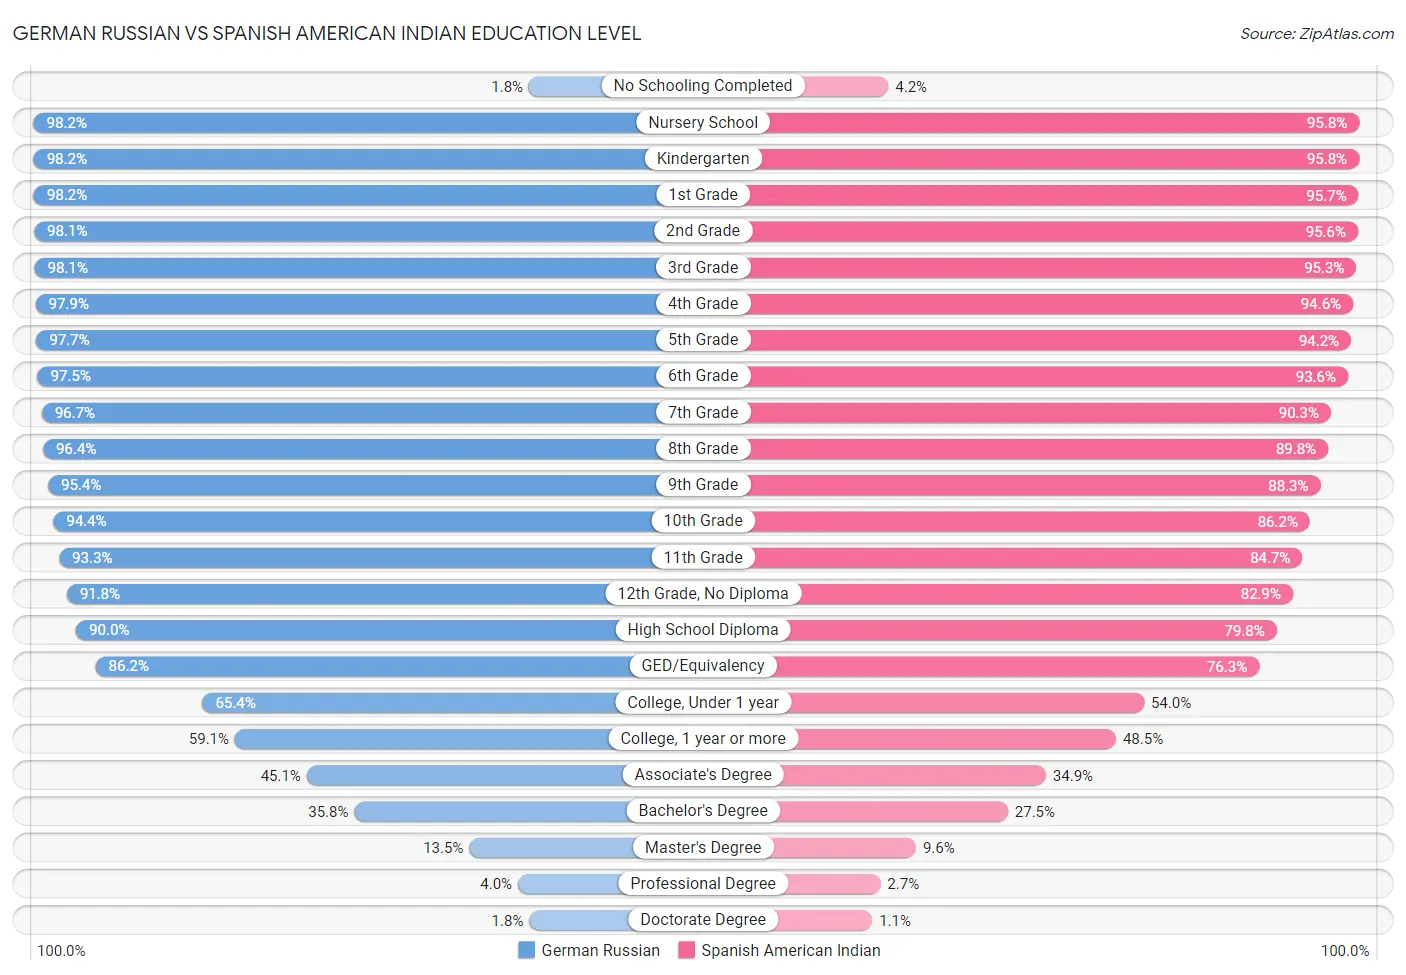 German Russian vs Spanish American Indian Education Level